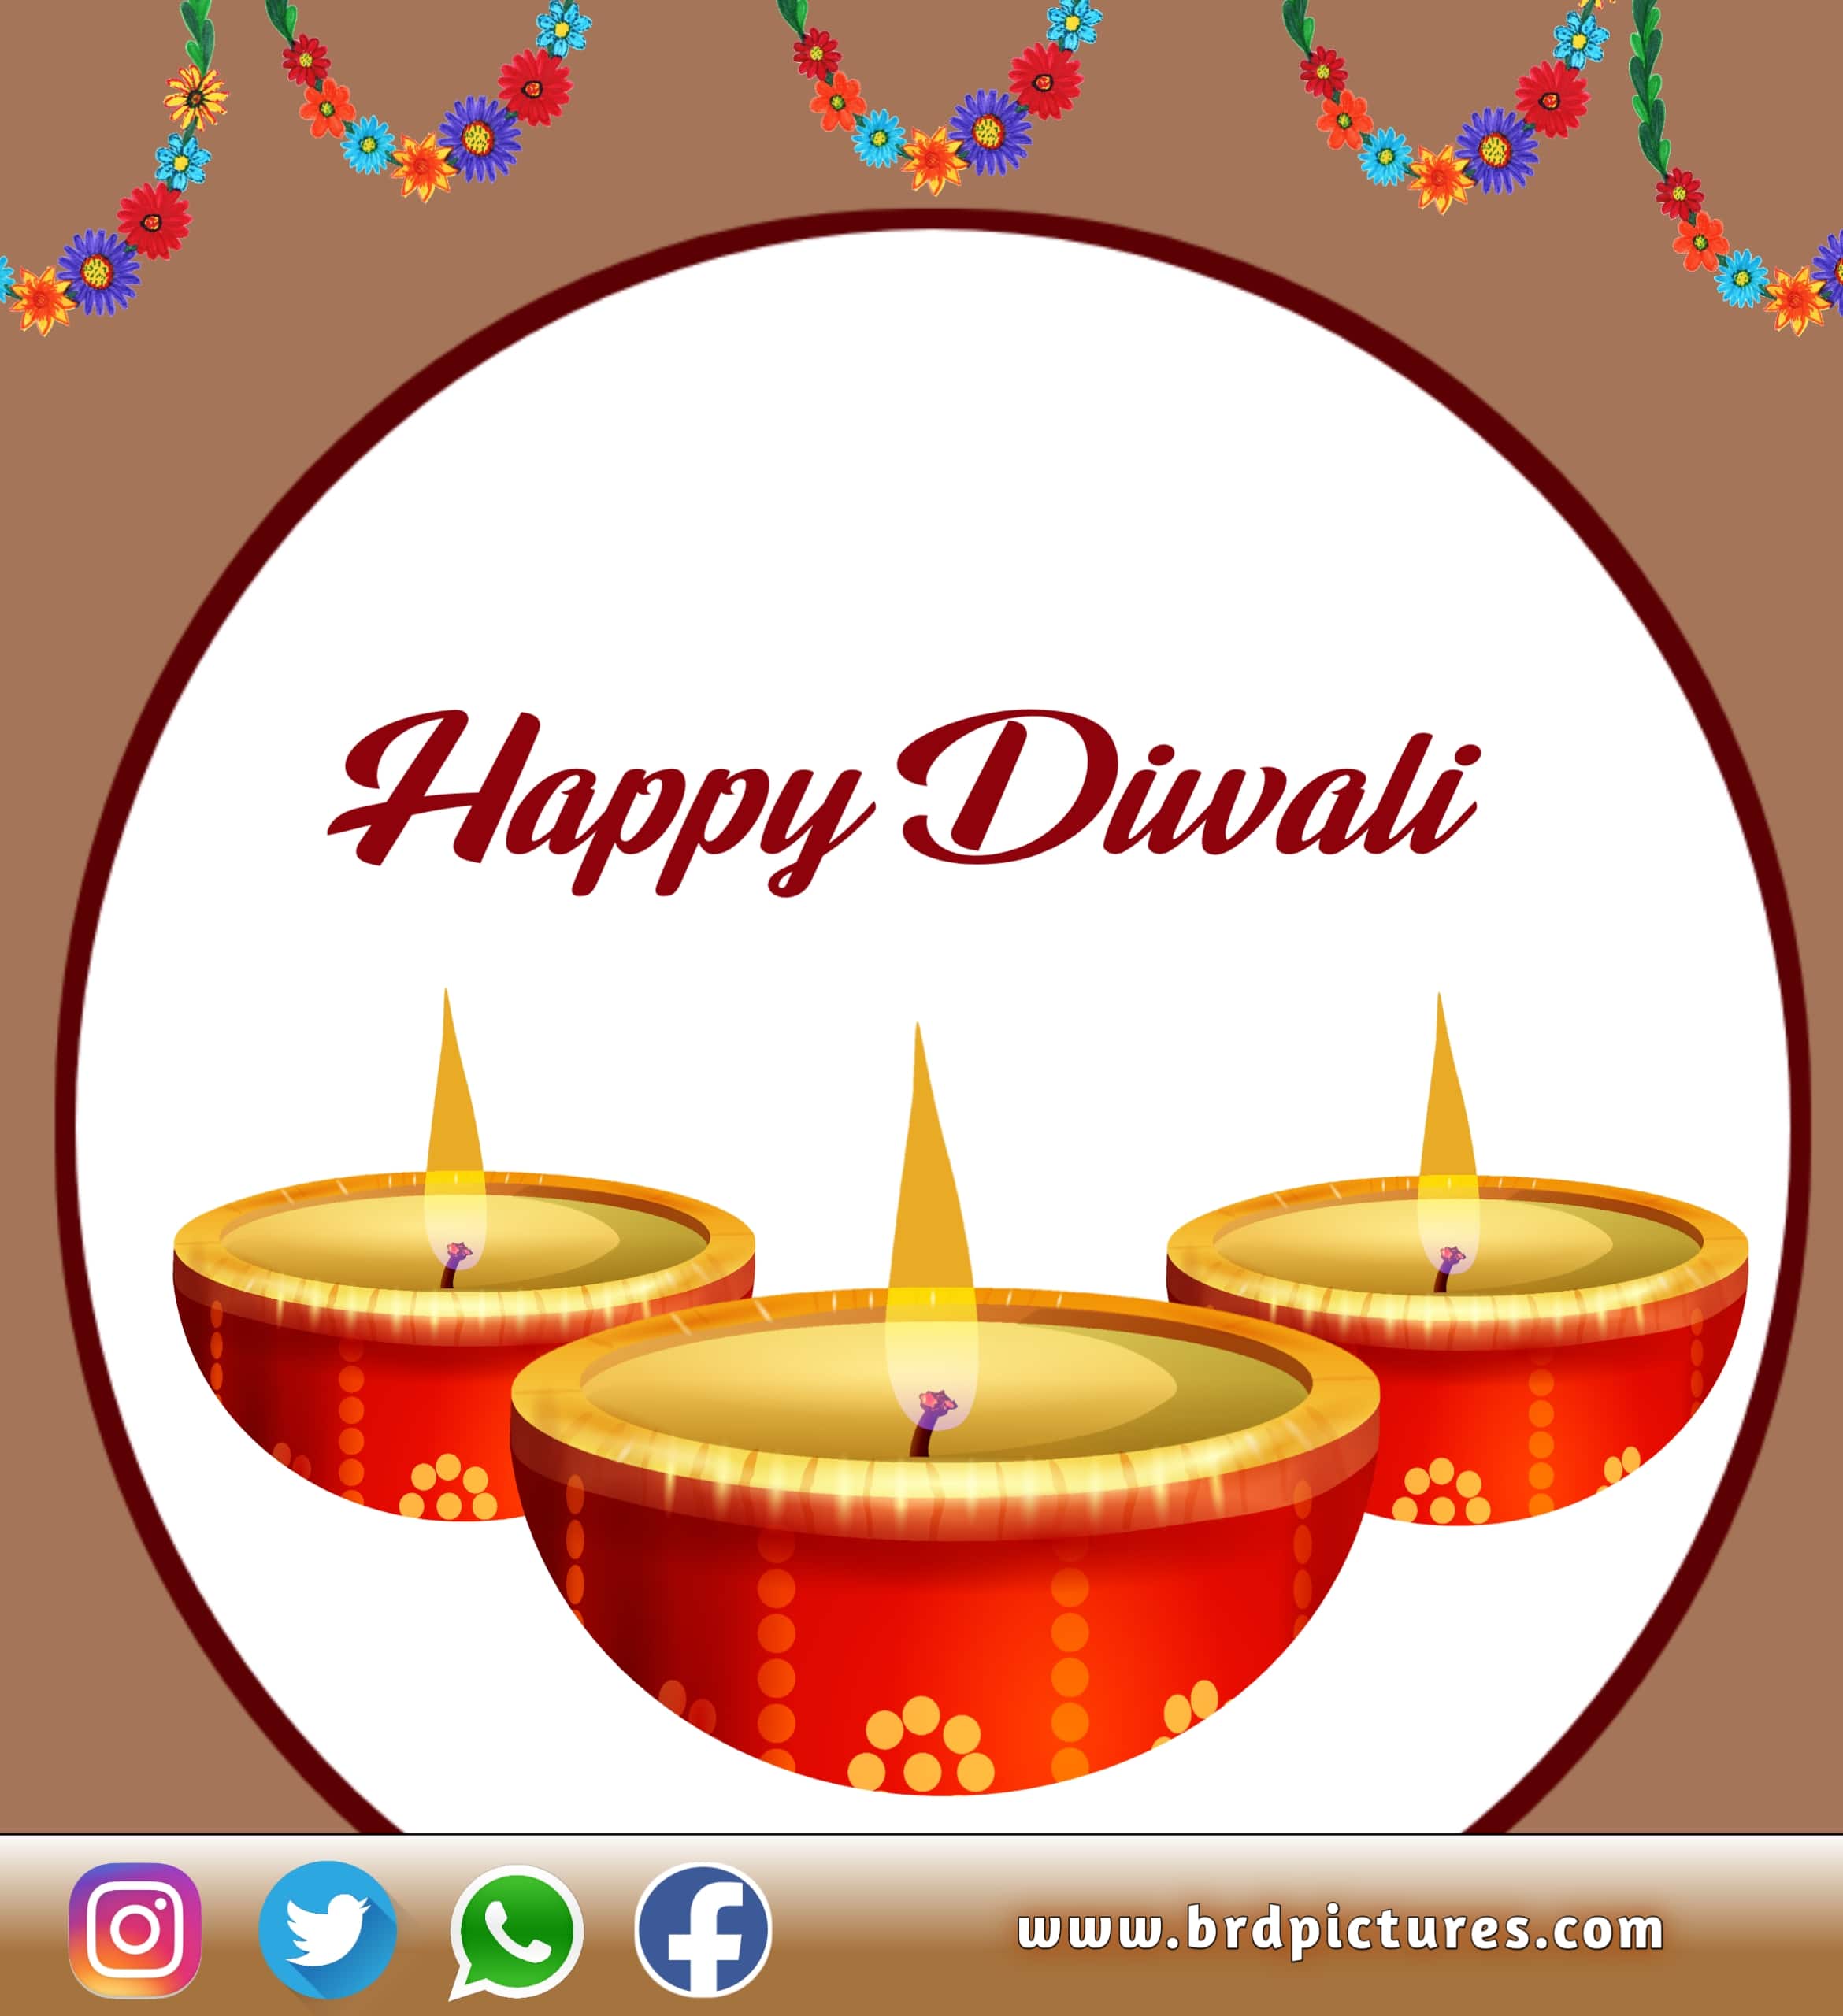 Creative Happy Diwali Wishes Image Poster 